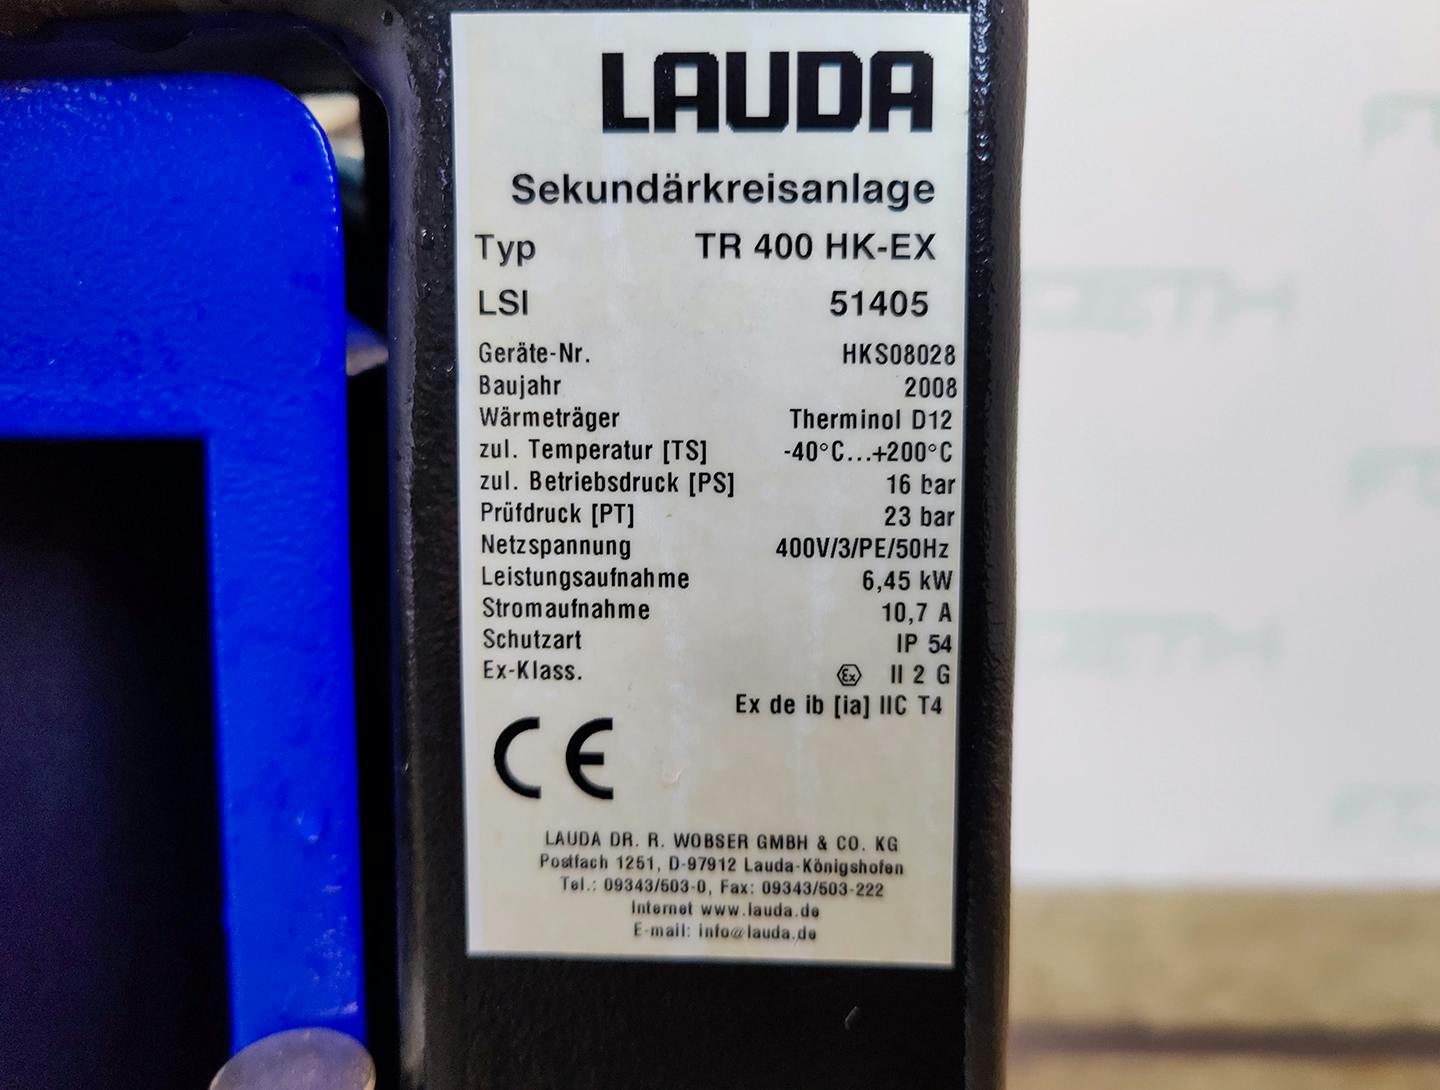 Lauda TR400 HK-EX "secondary circuit system" - Temperiergerät - image 6